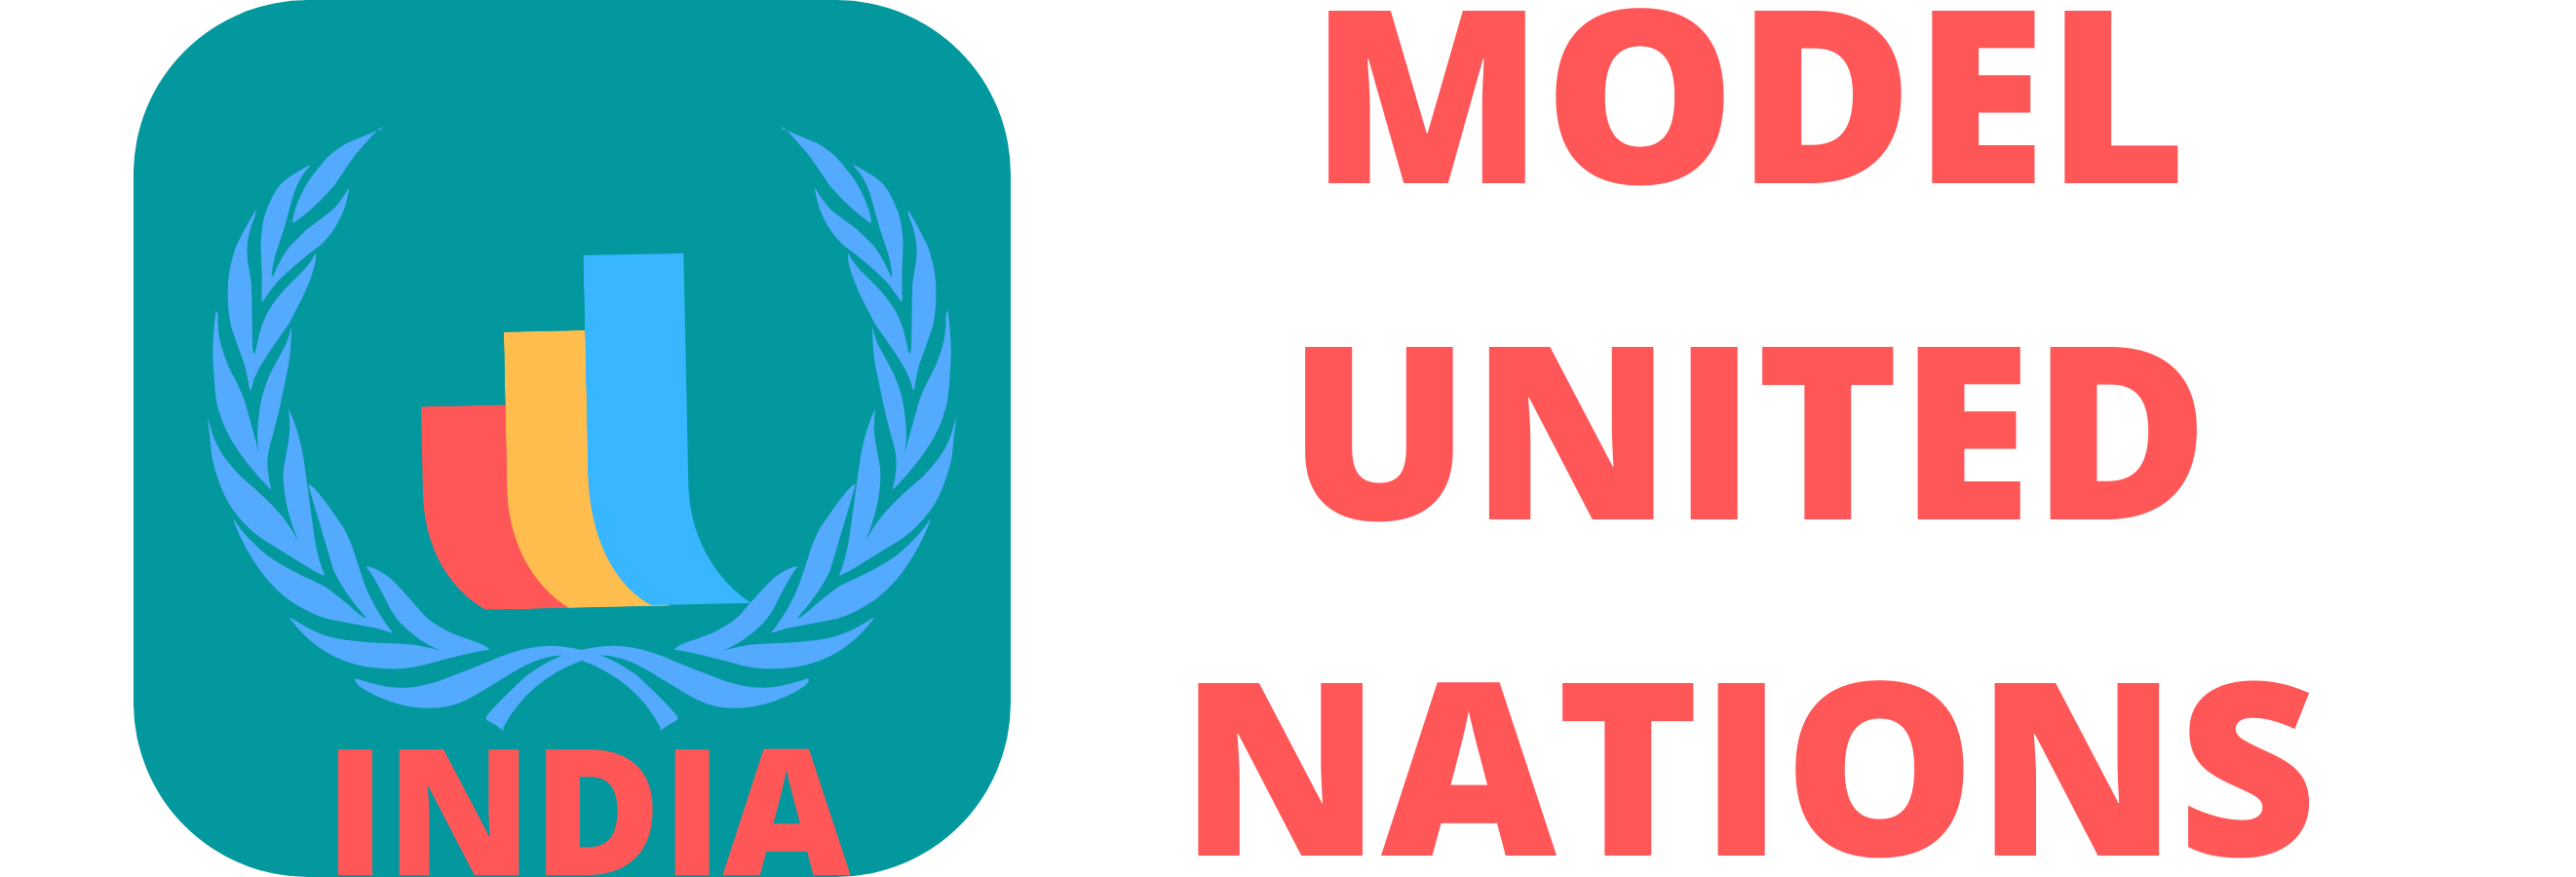 Model United Nations, India